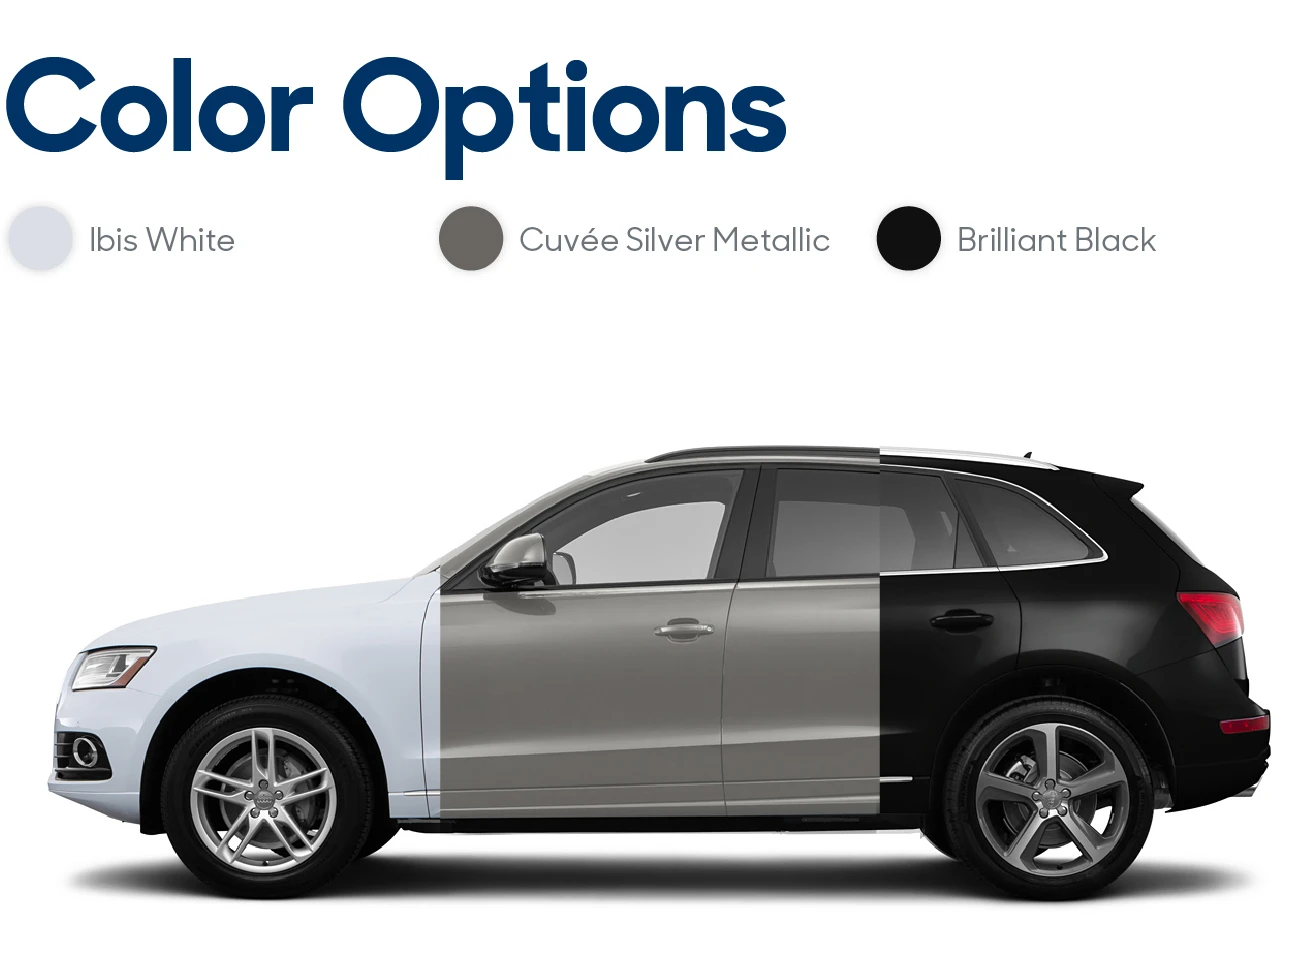 2015 Audi Q5 Review: Reviews, Photos, and More: Color Options | CarMax